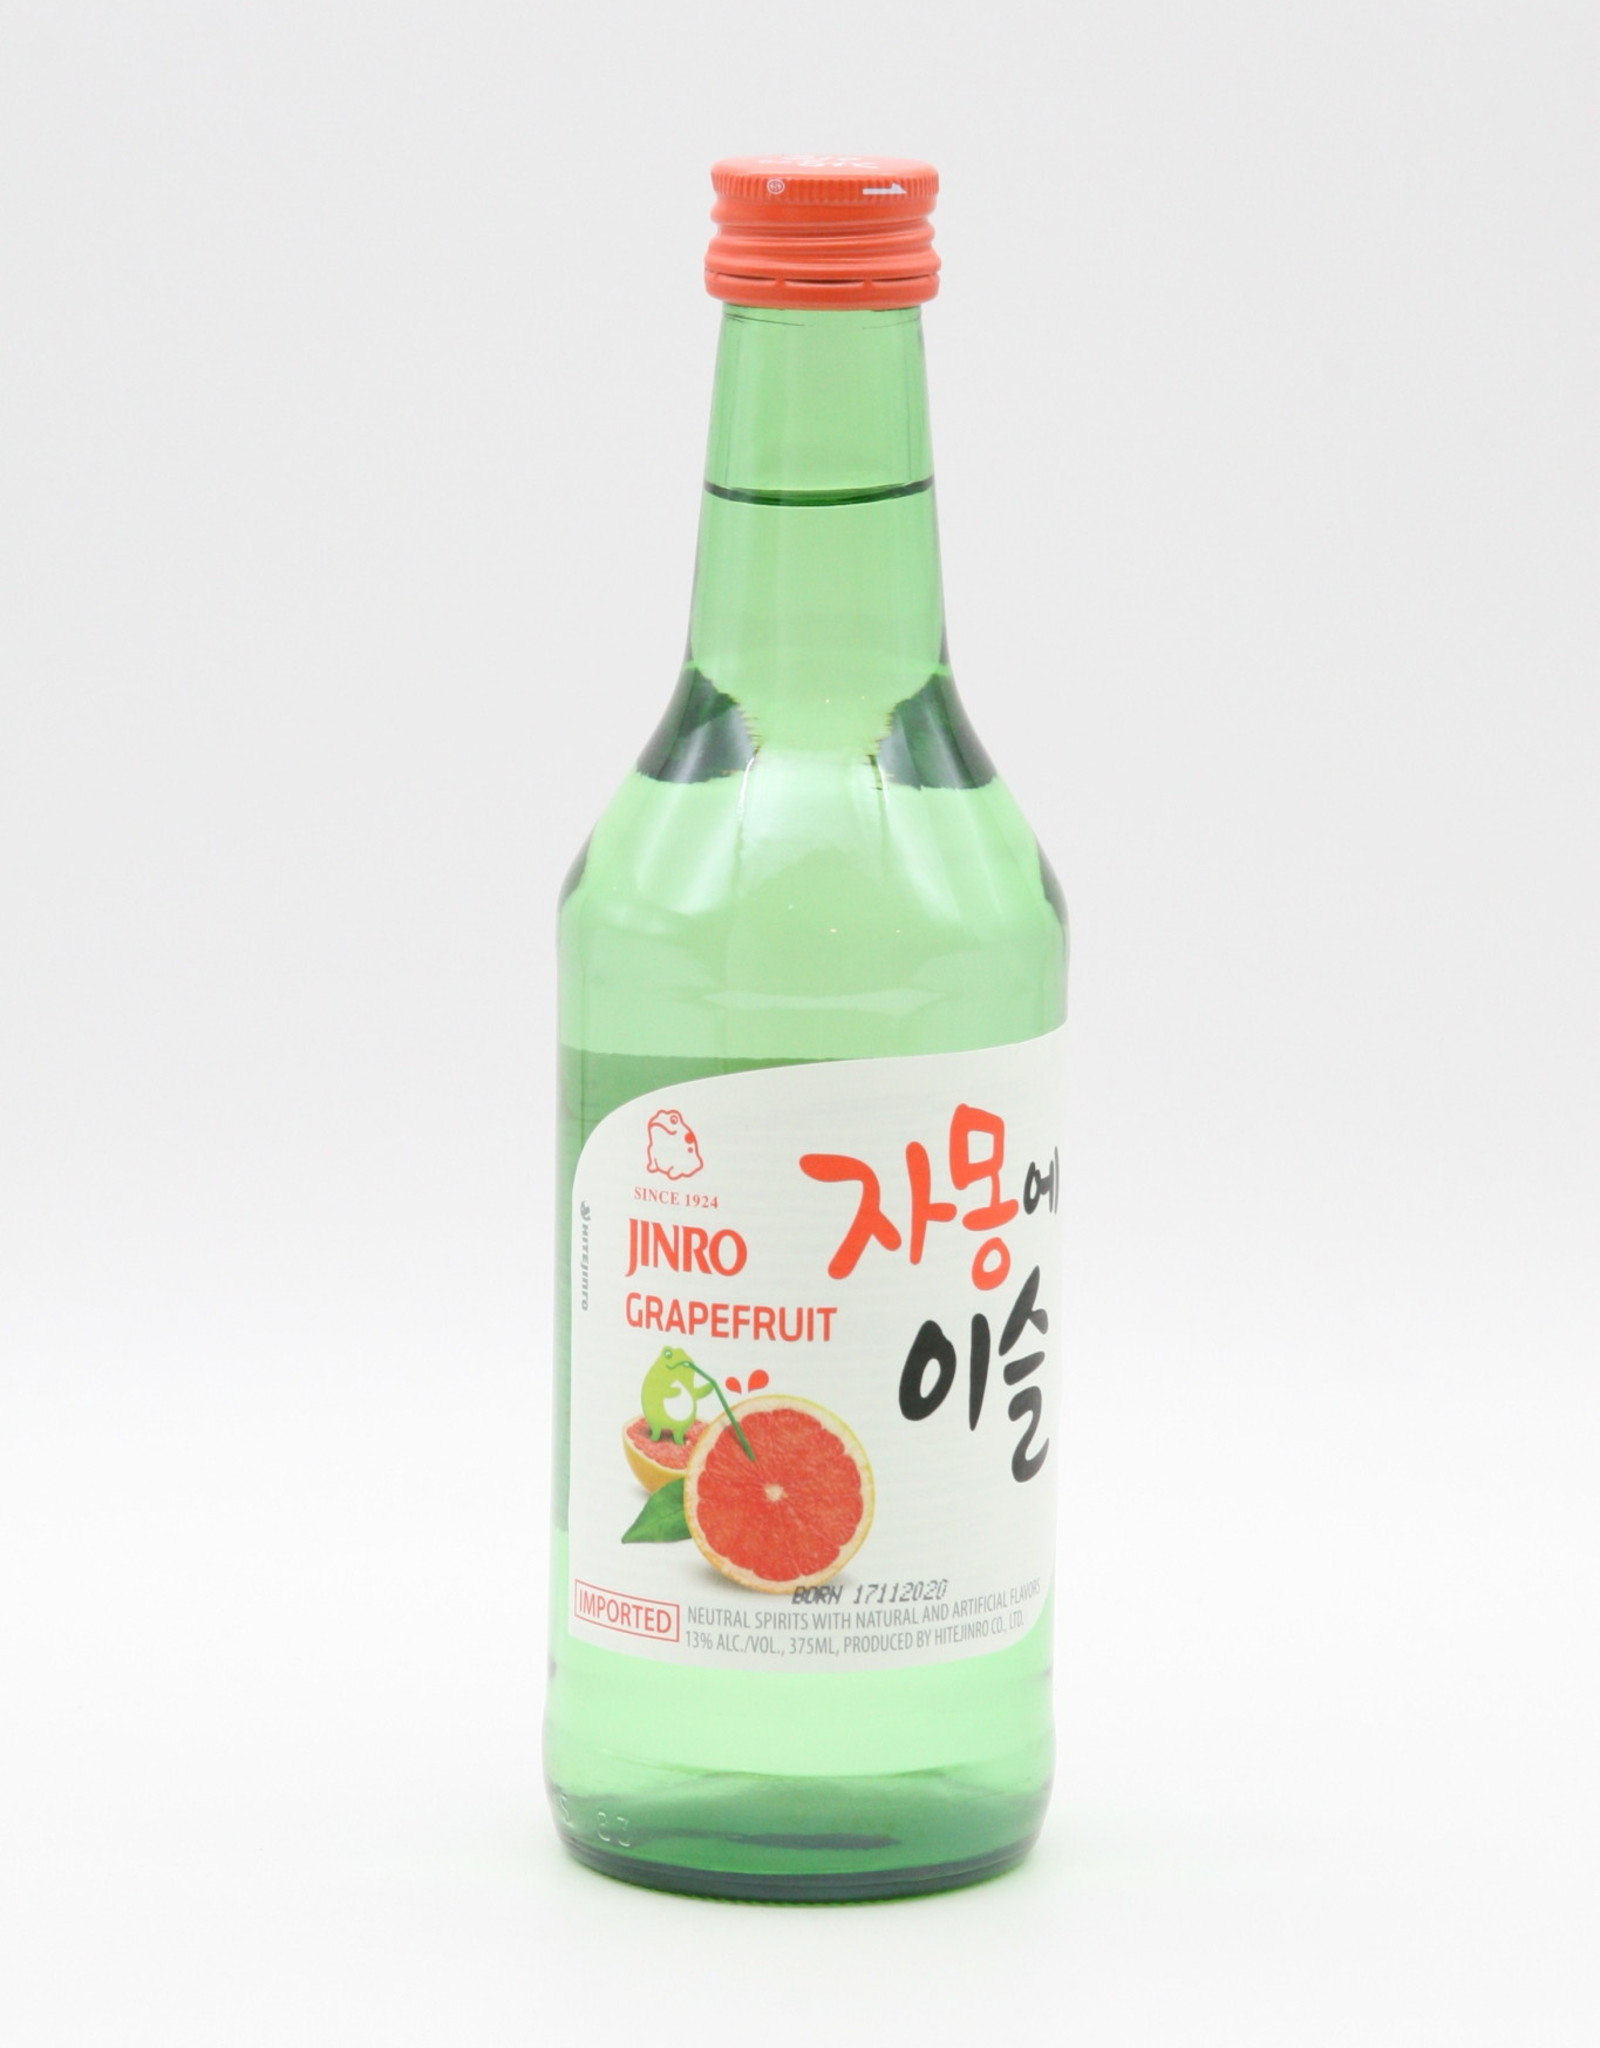 Jinro Chamisul Grapefruit 375ml